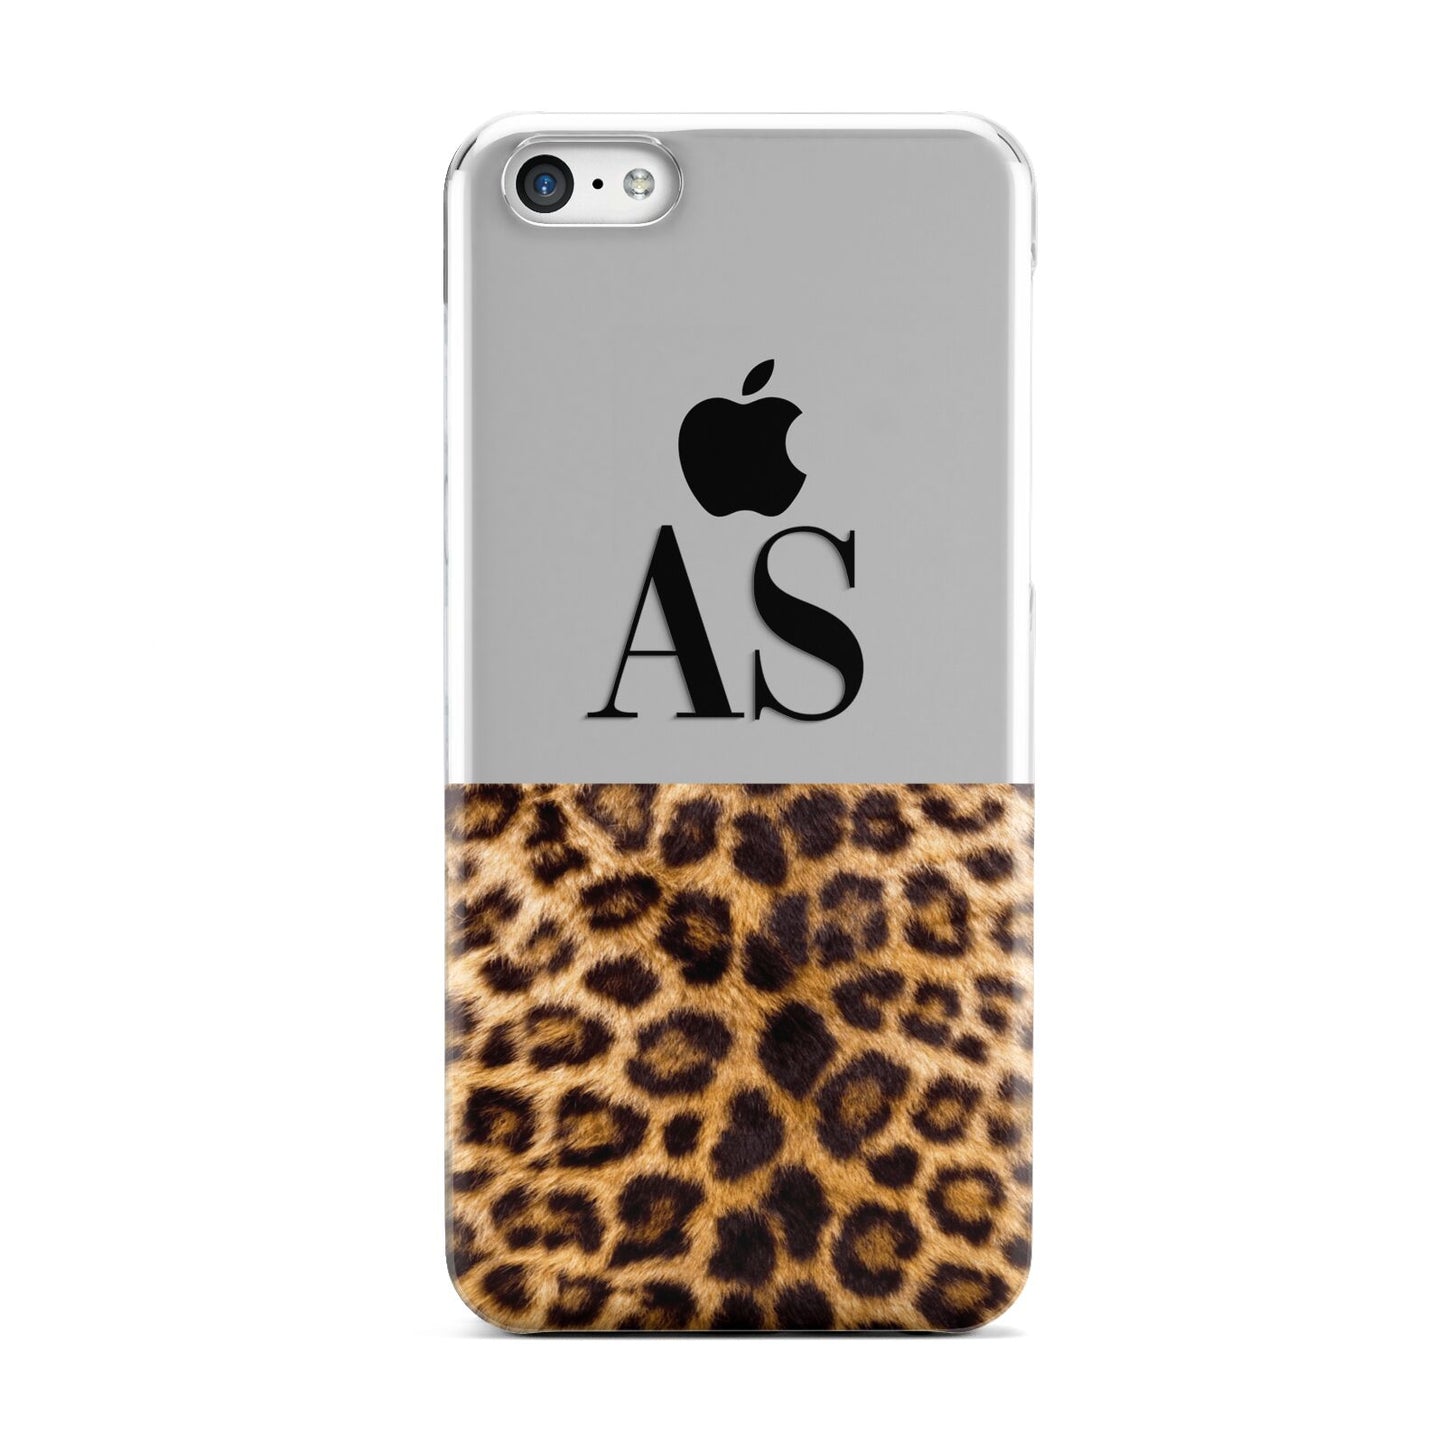 Initialled Leopard Print Apple iPhone 5c Case